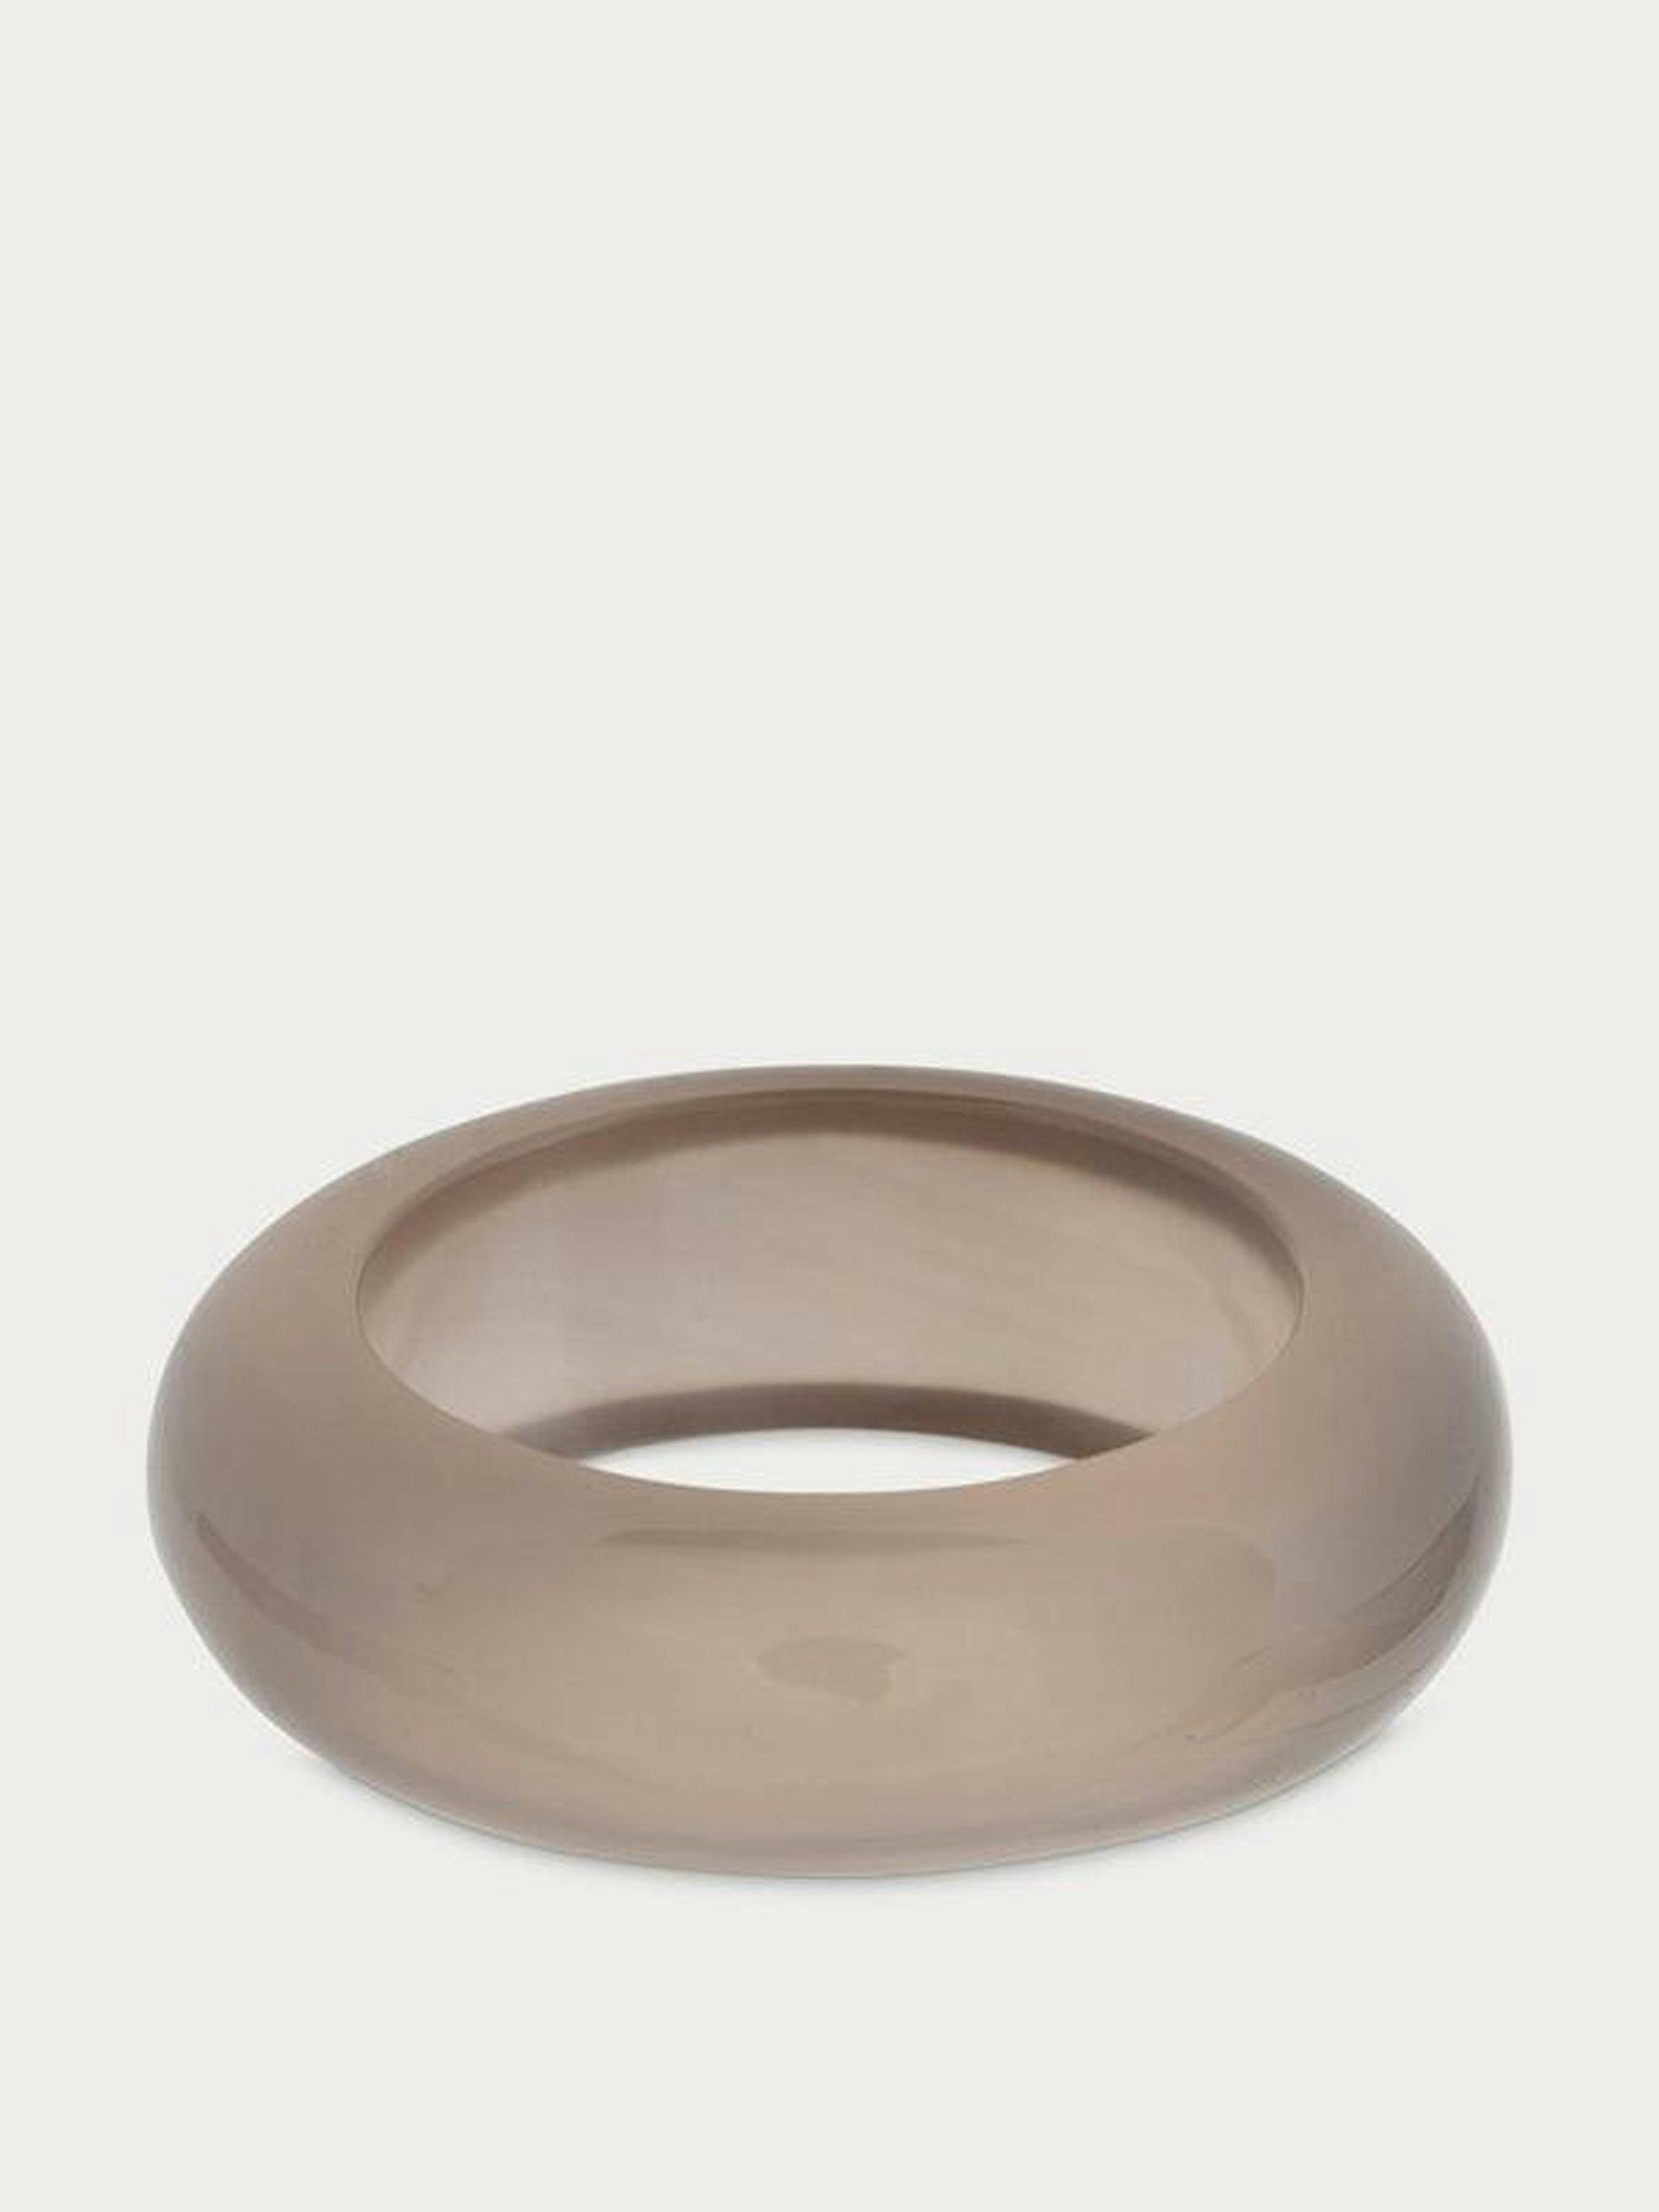 Essential grey agate ring